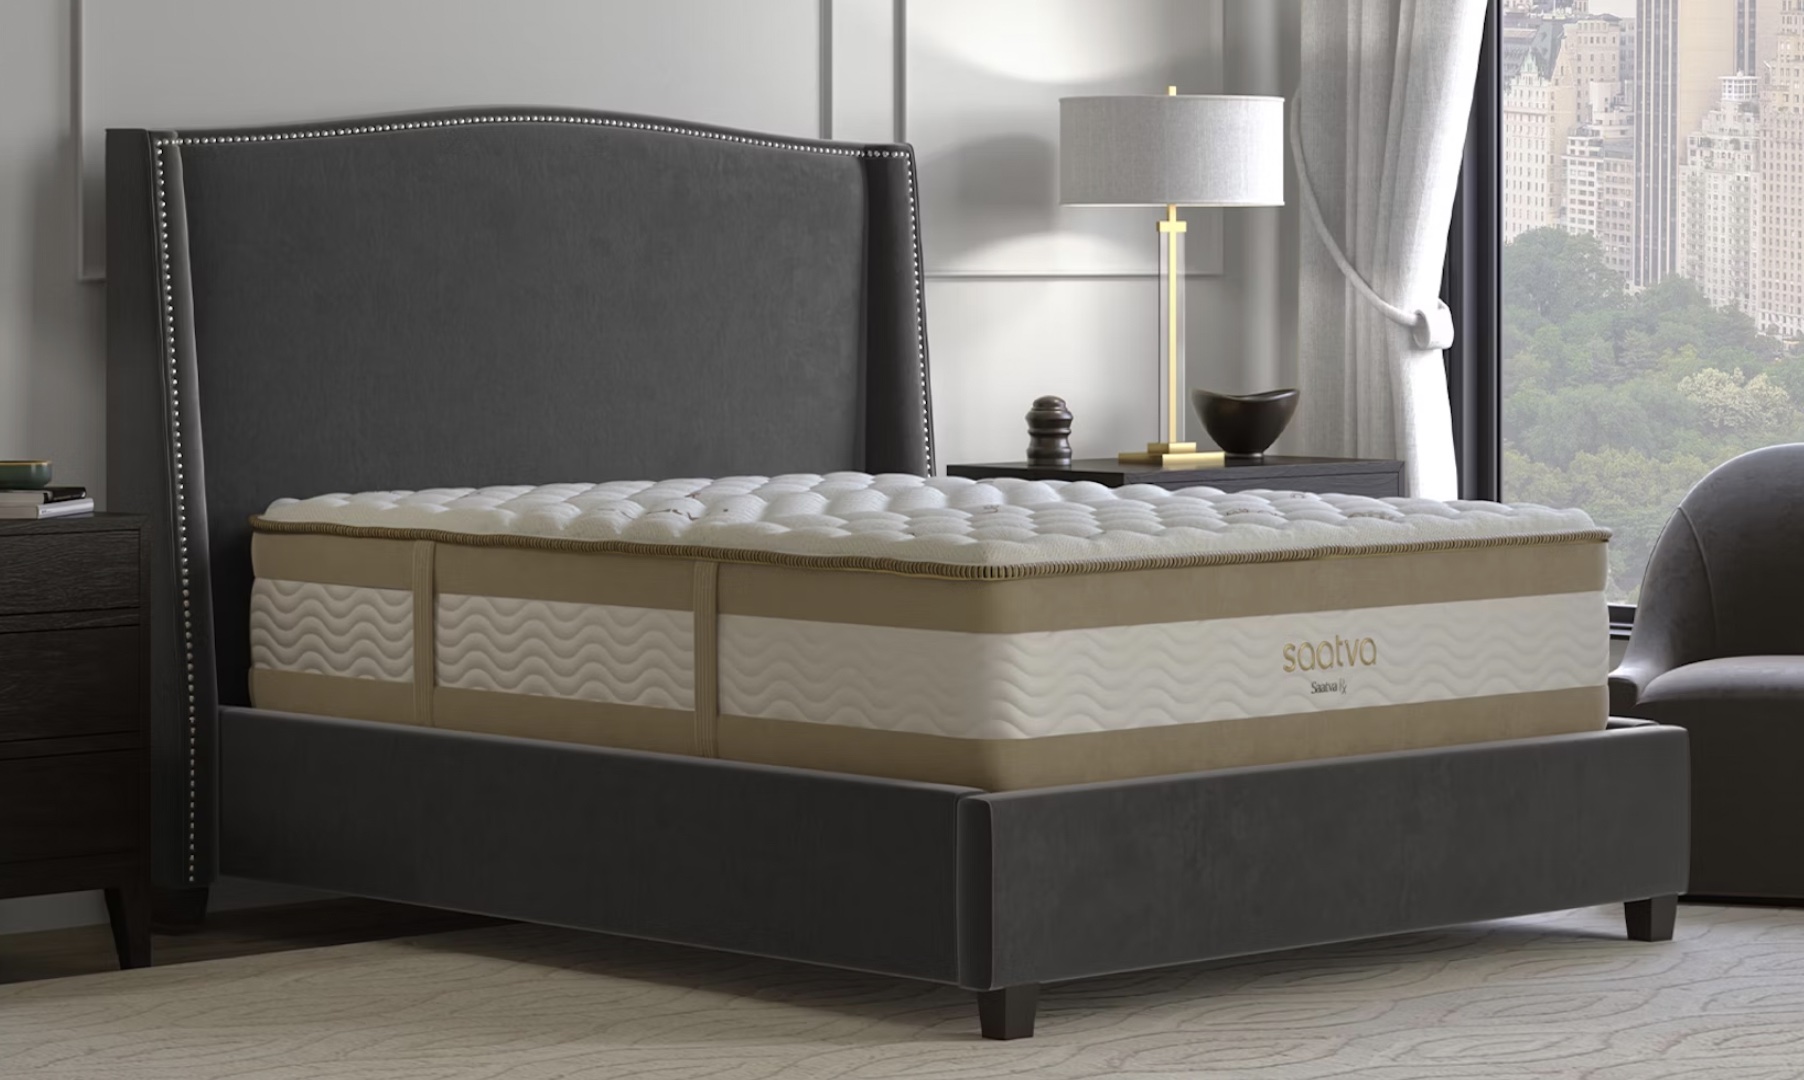 saatva rx mattress review